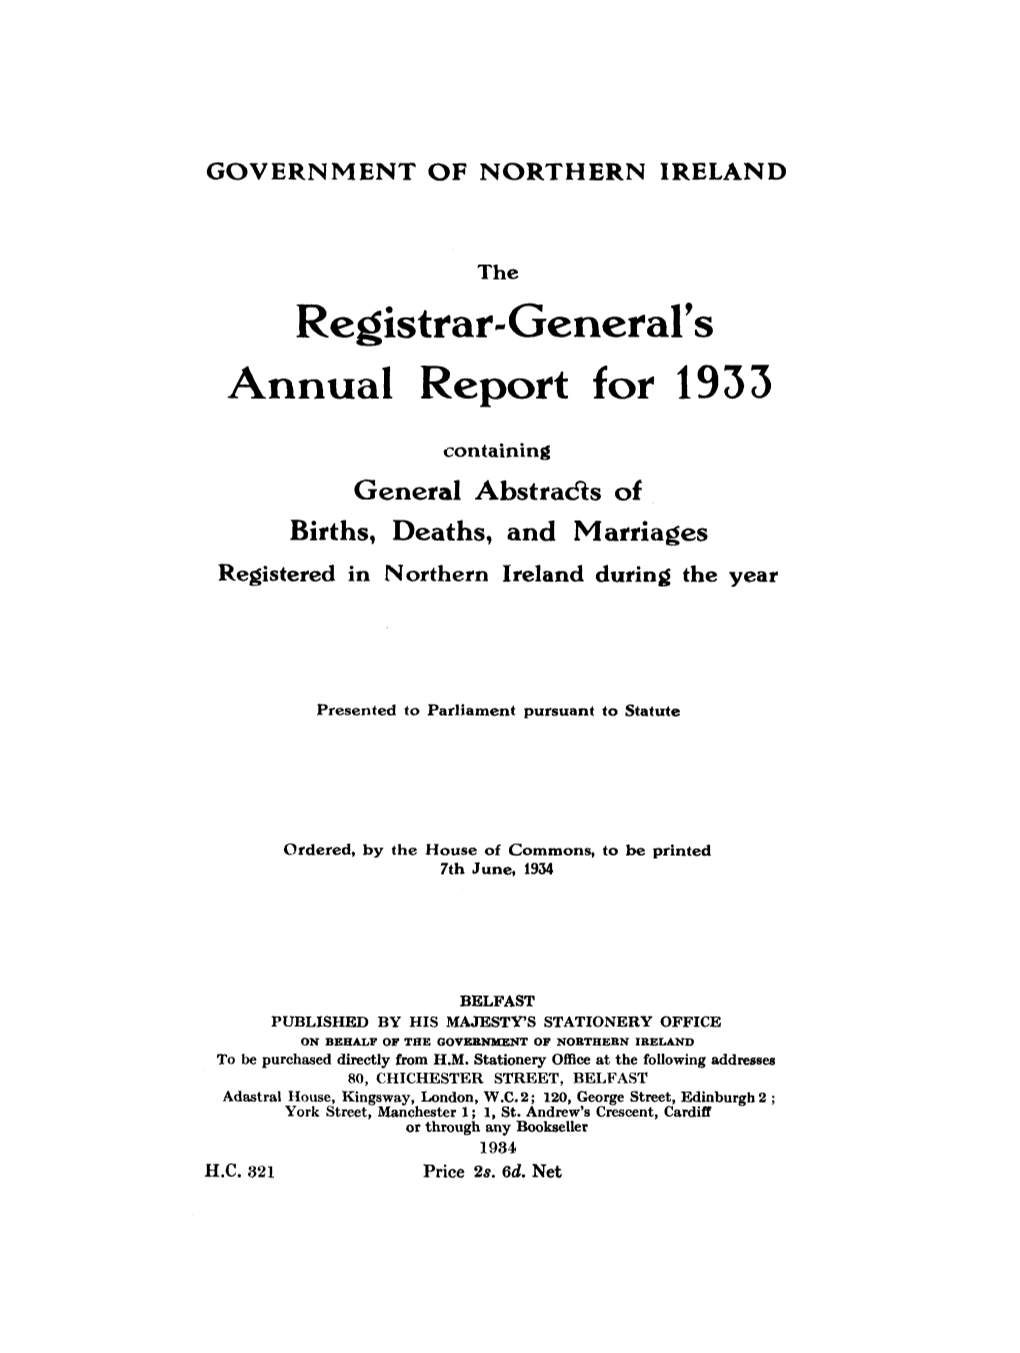 Registrar-General's Annual Report for 1933